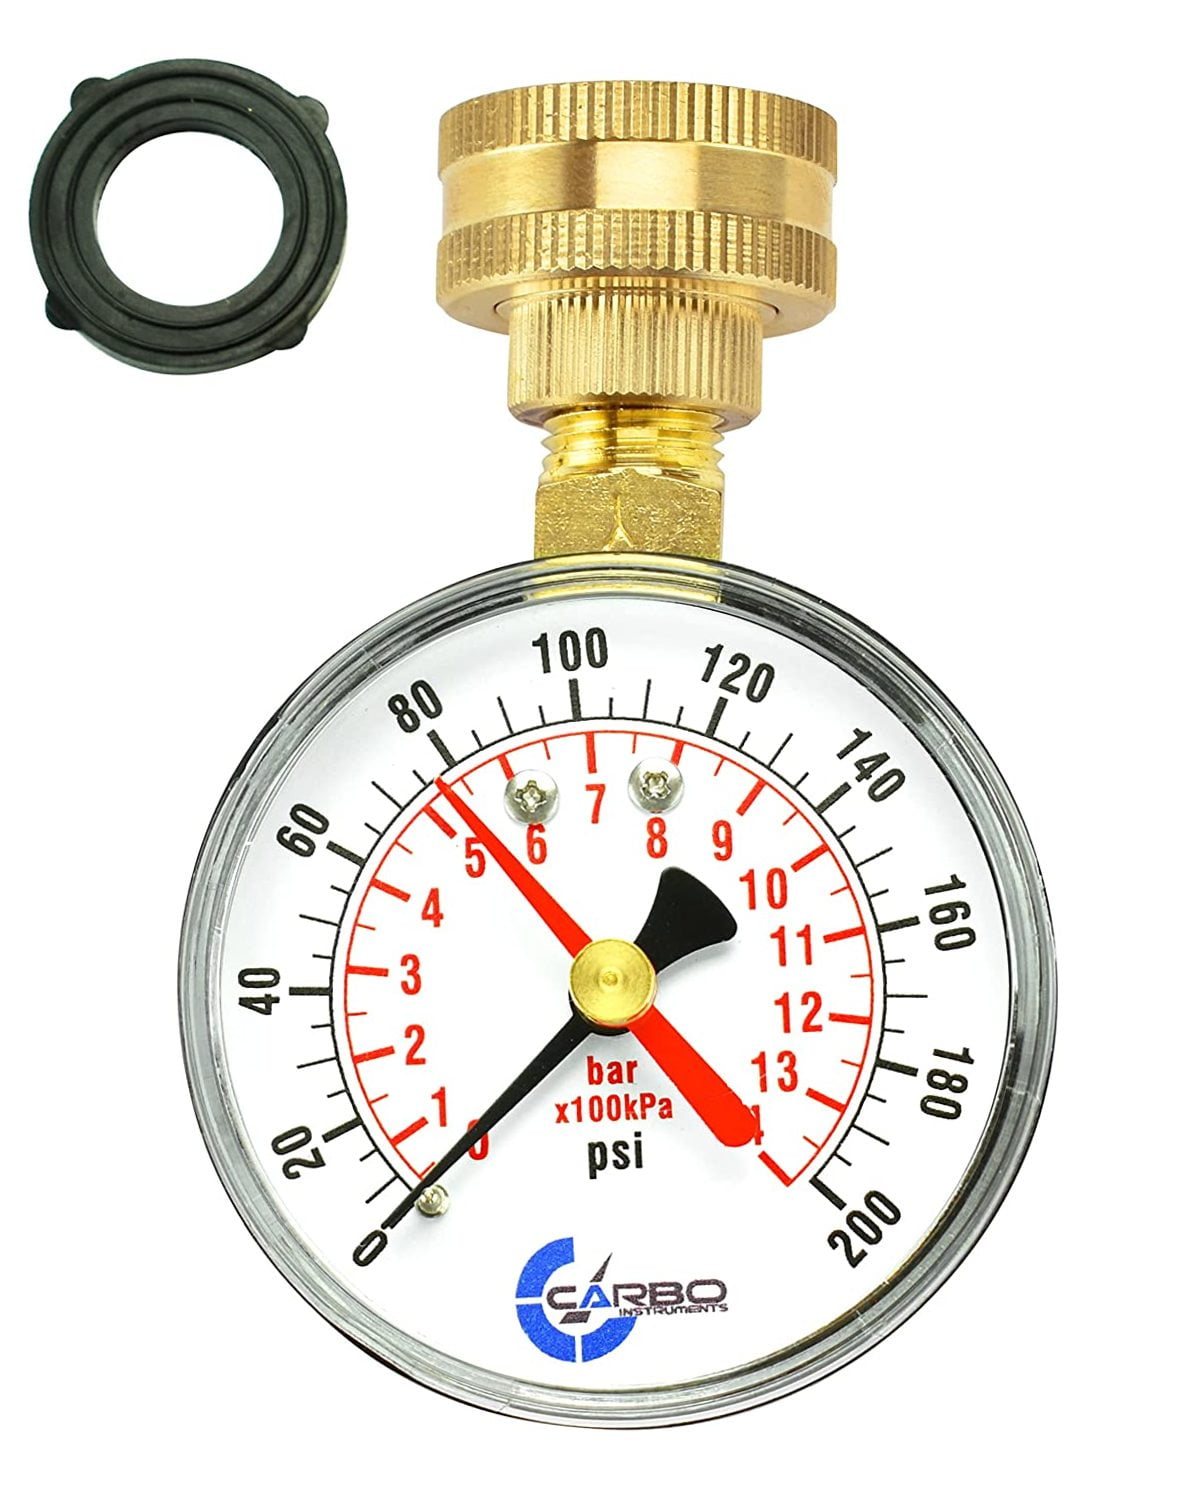 ✔ 0-160psi Silverline MAINS WATER PRESSURE TEST GAUGE Plumbing Tester 0-11bar 